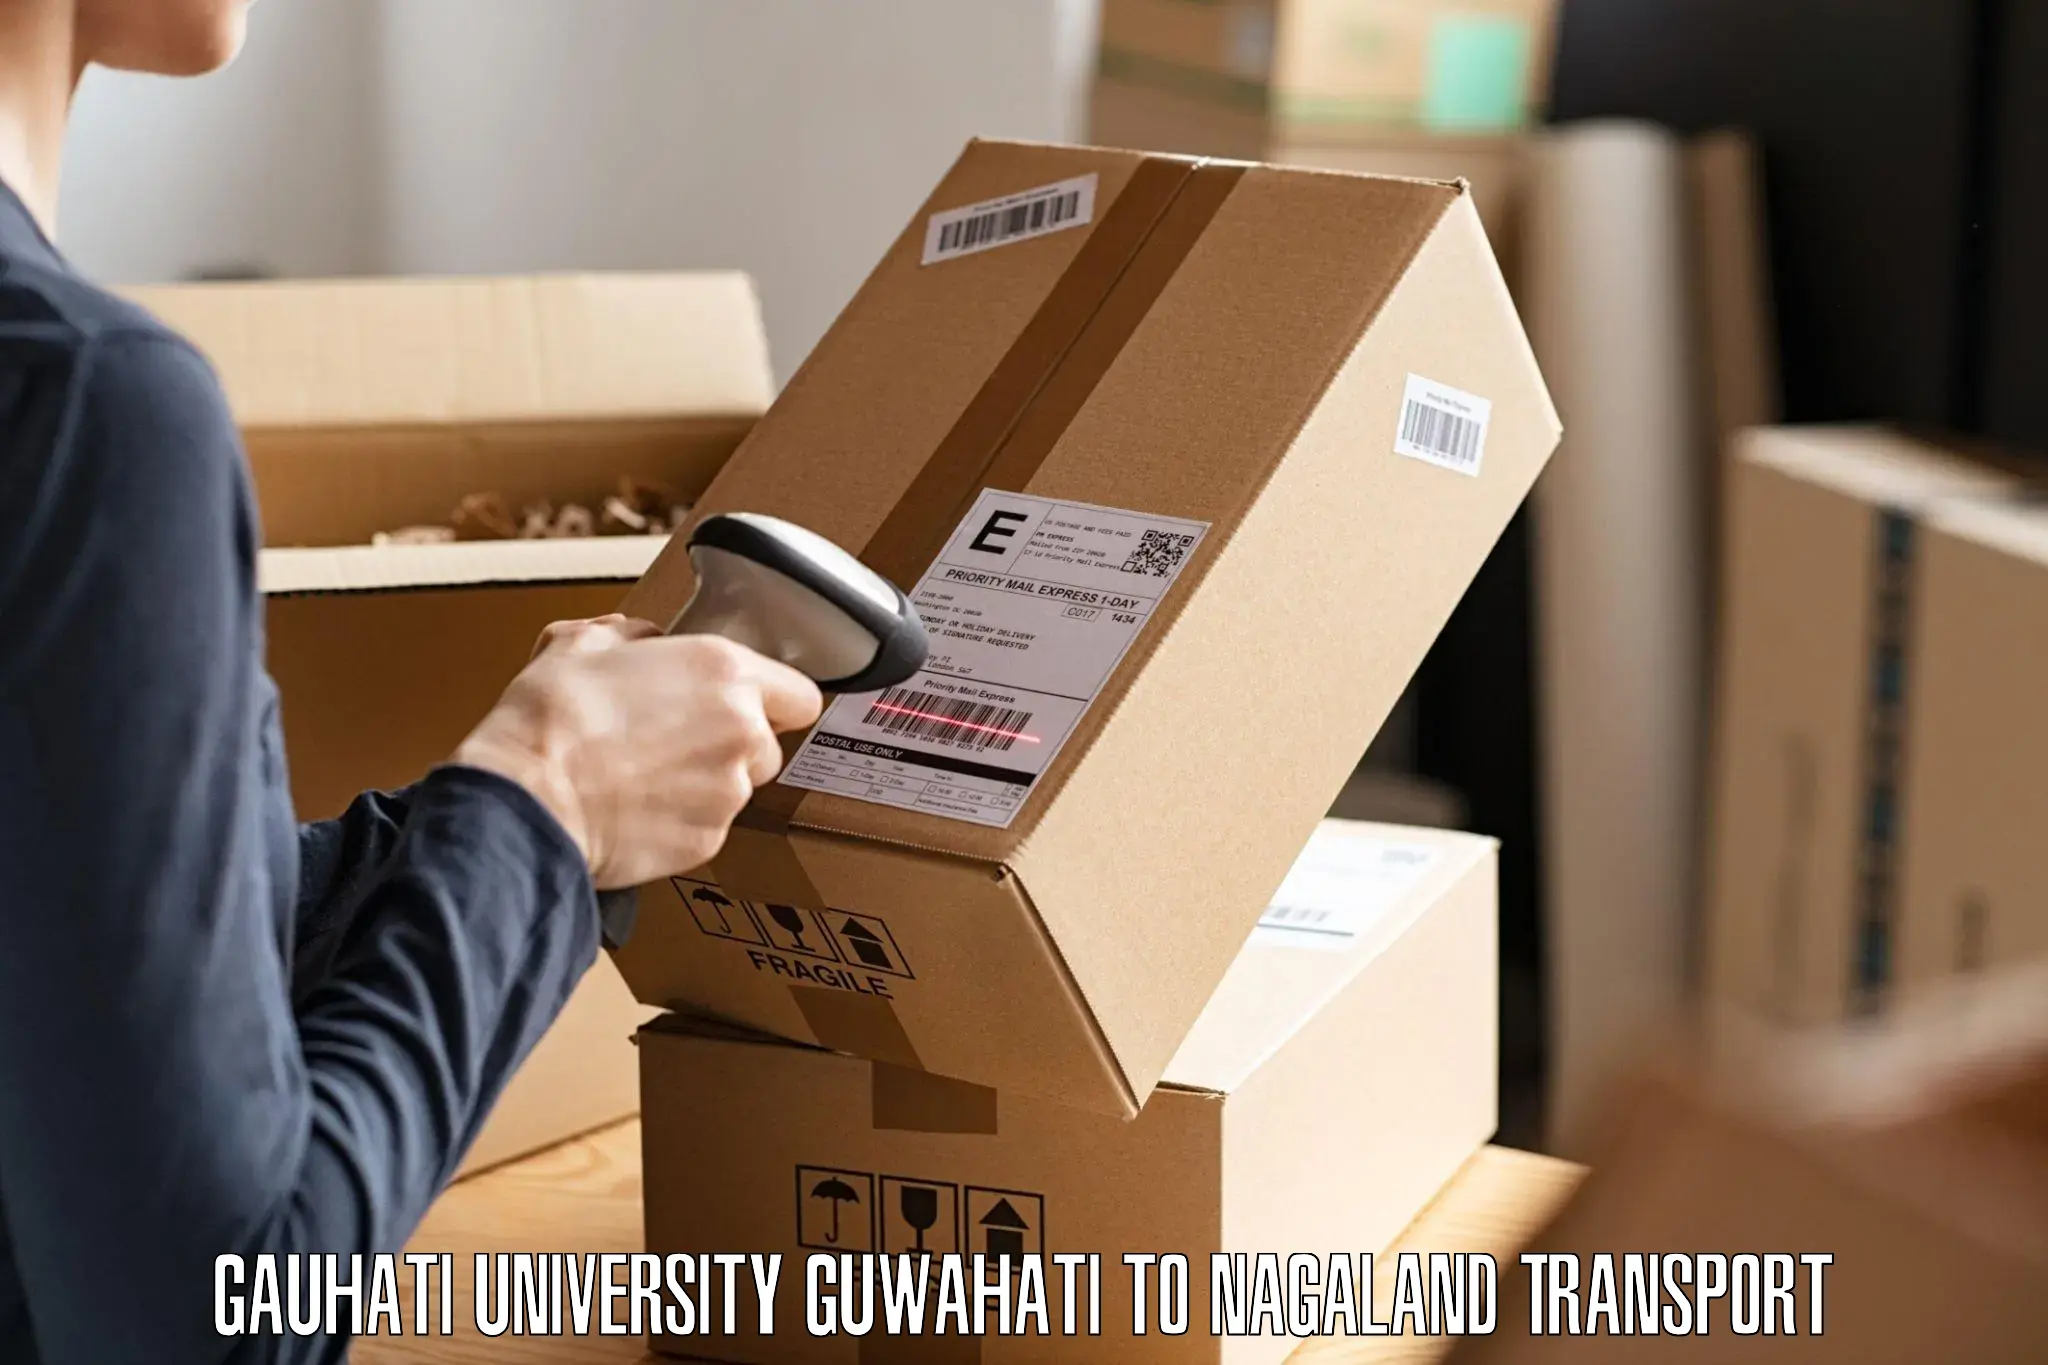 Shipping services Gauhati University Guwahati to Dimapur